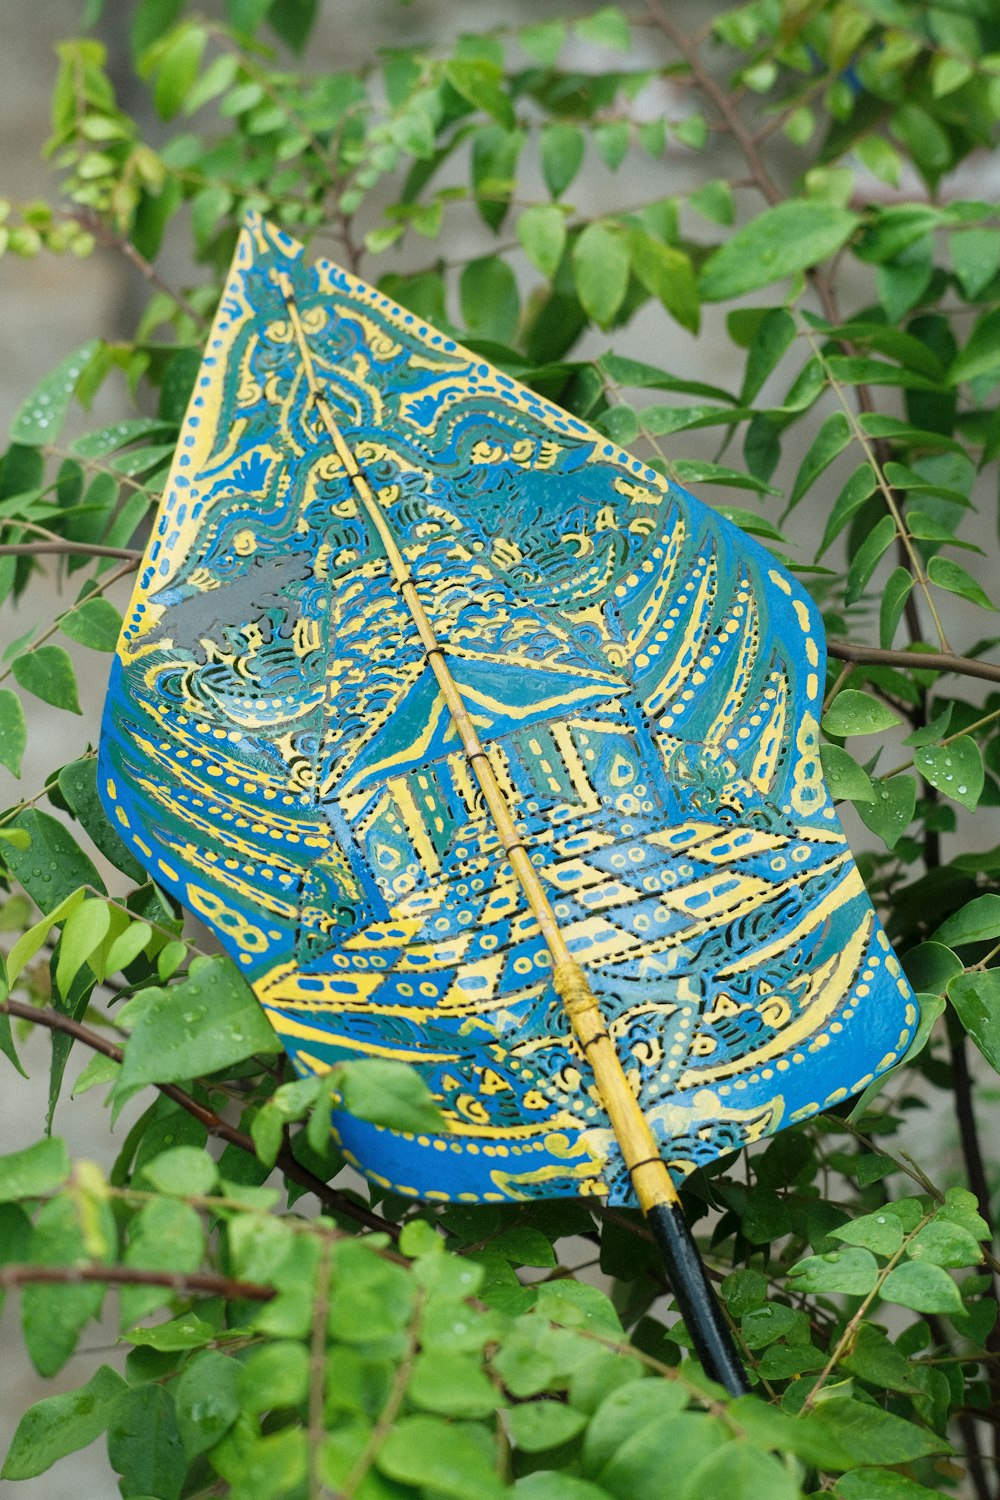 a blue and yellow umbrella